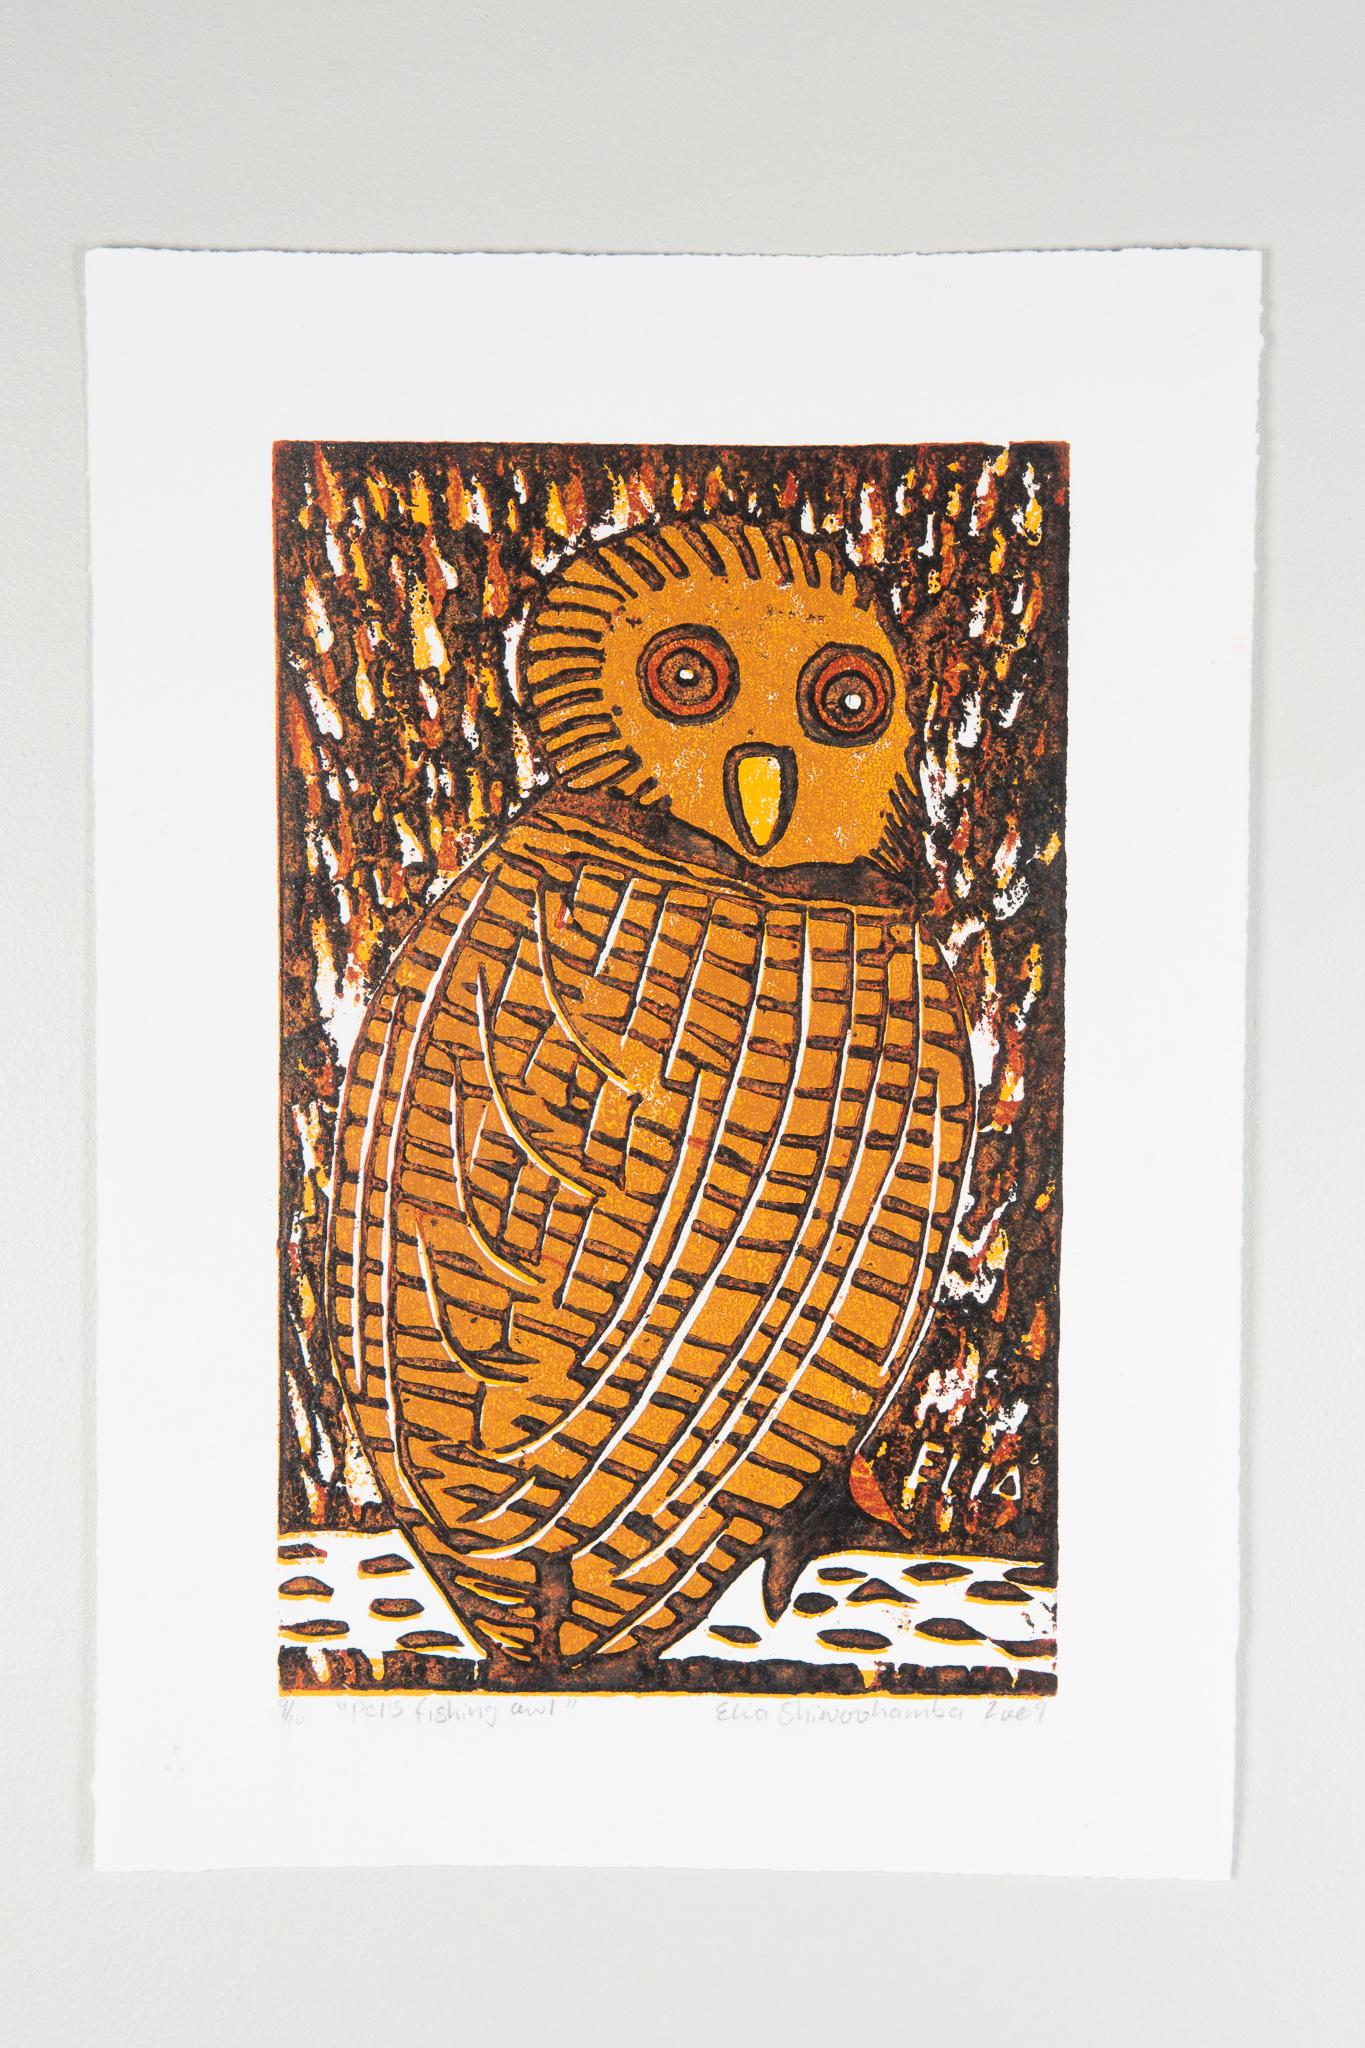 Pel's Fishing Owl, Elia Shiwoohamba, Cardboard print on paper